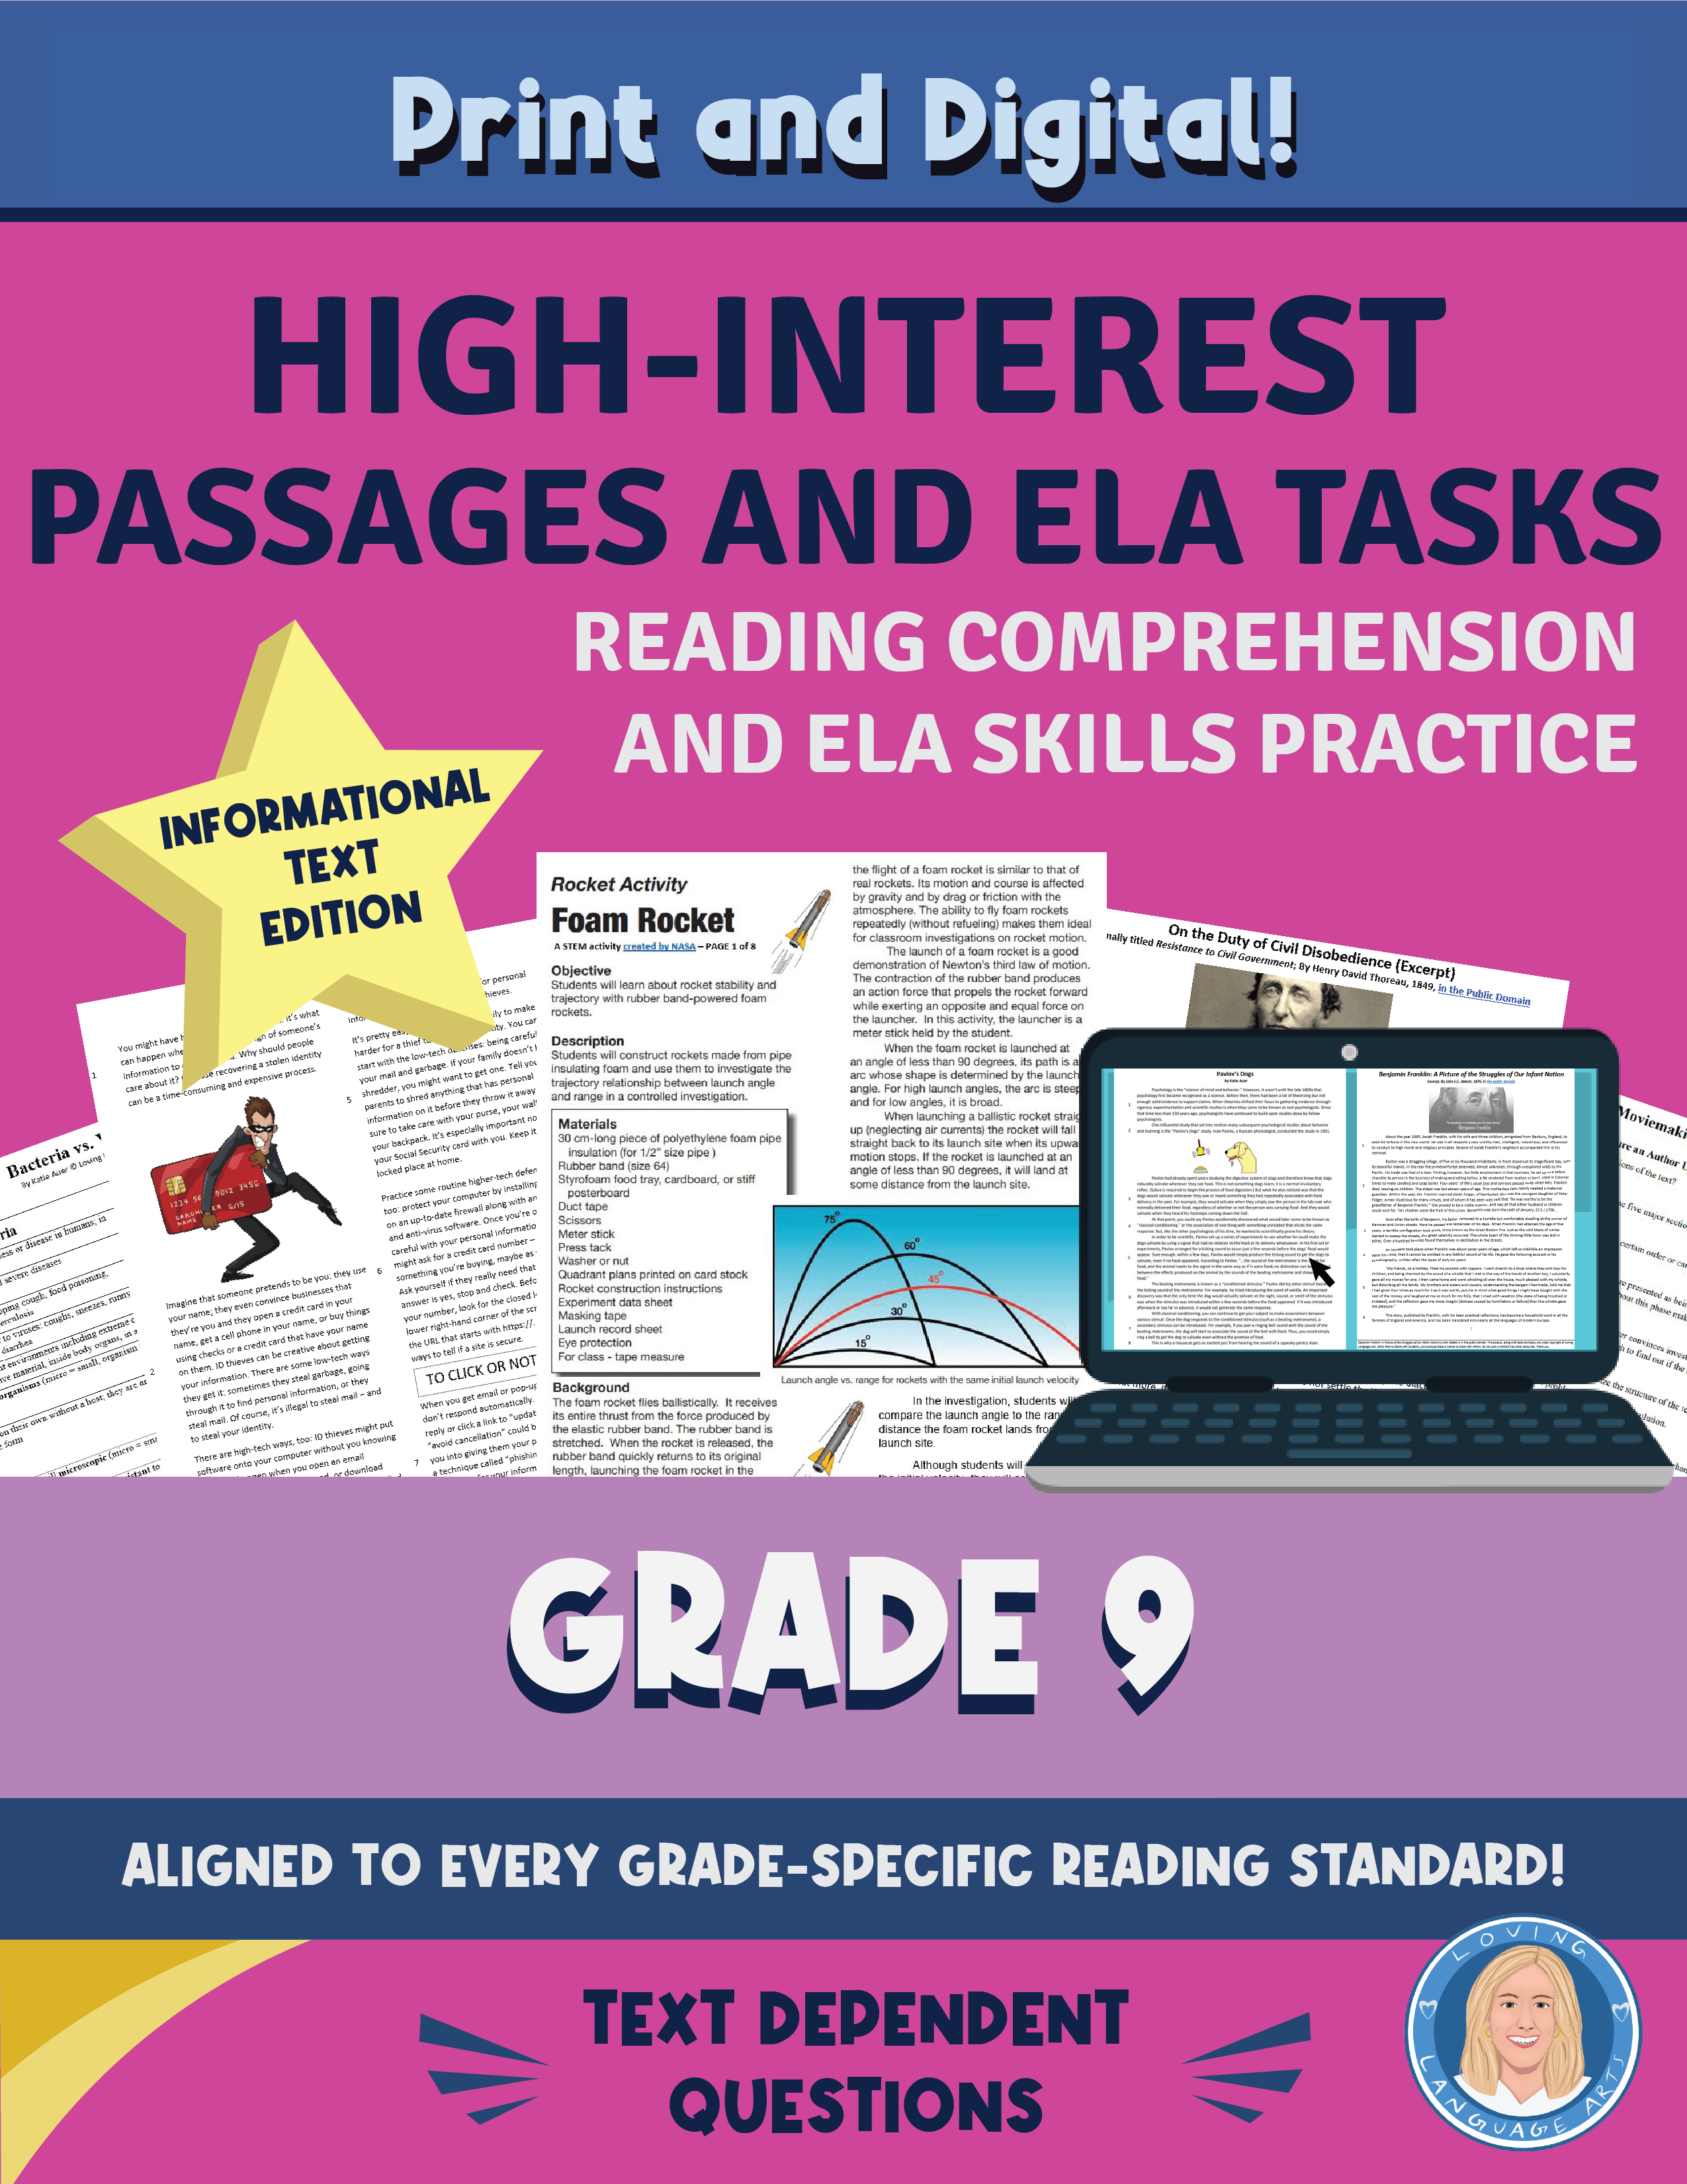 9th grade language arts workbook - High-interest passages and tasks.